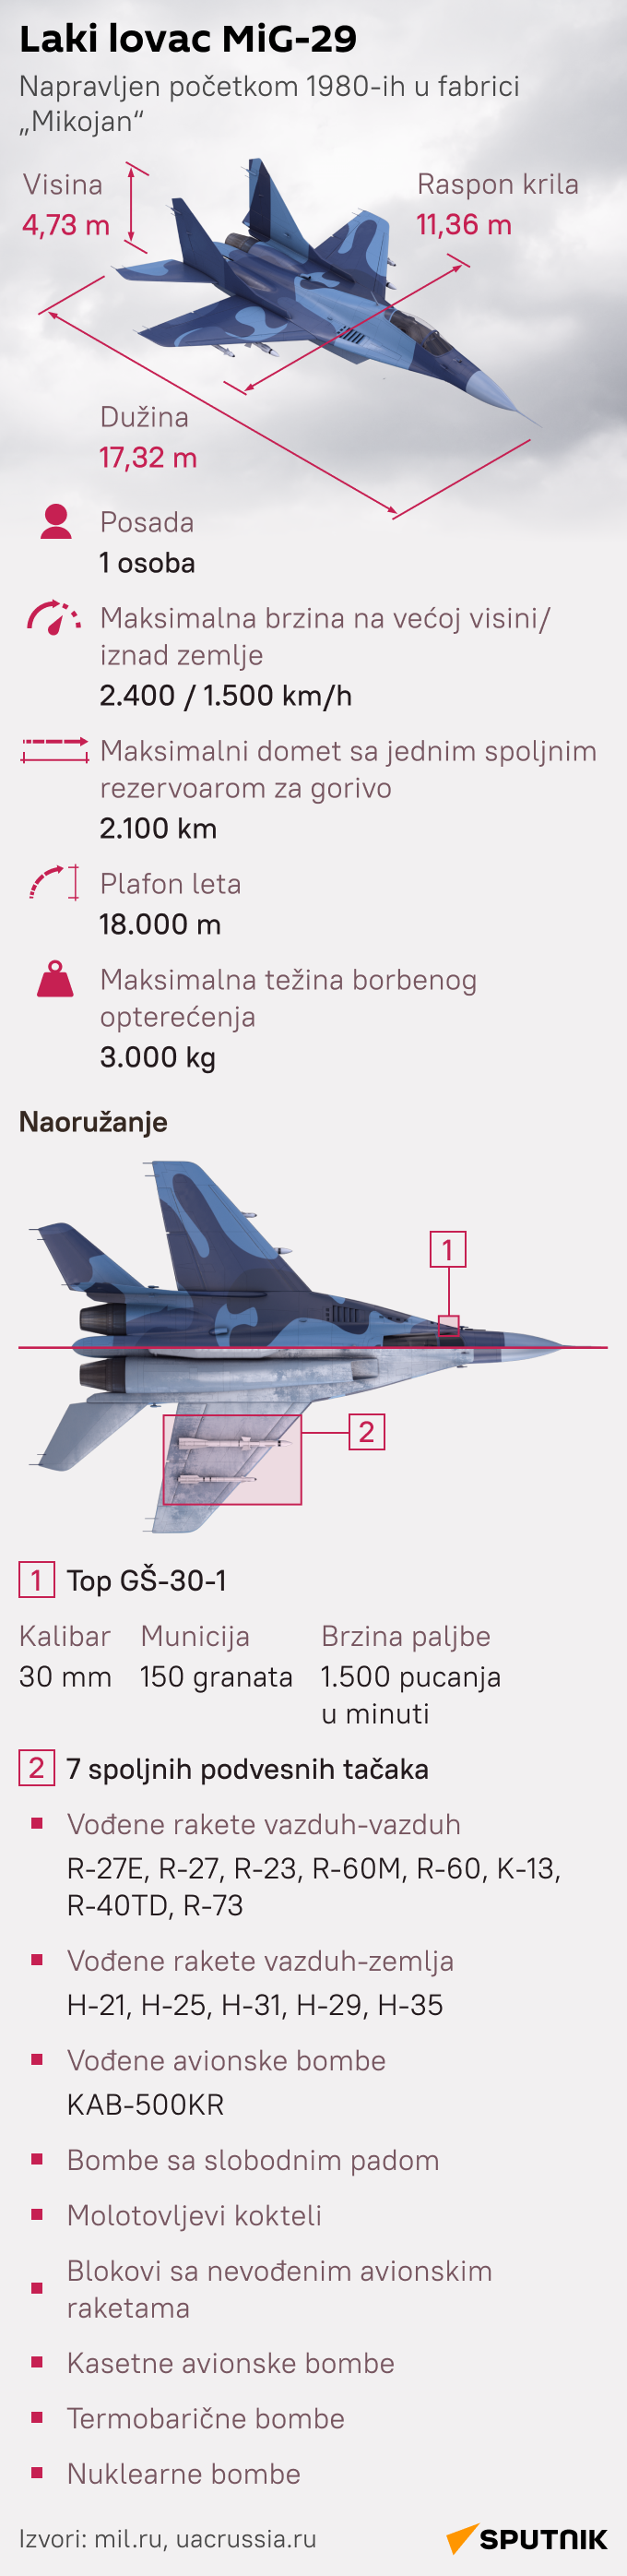 Infografika MiG-29 LAT mob - Sputnik Srbija